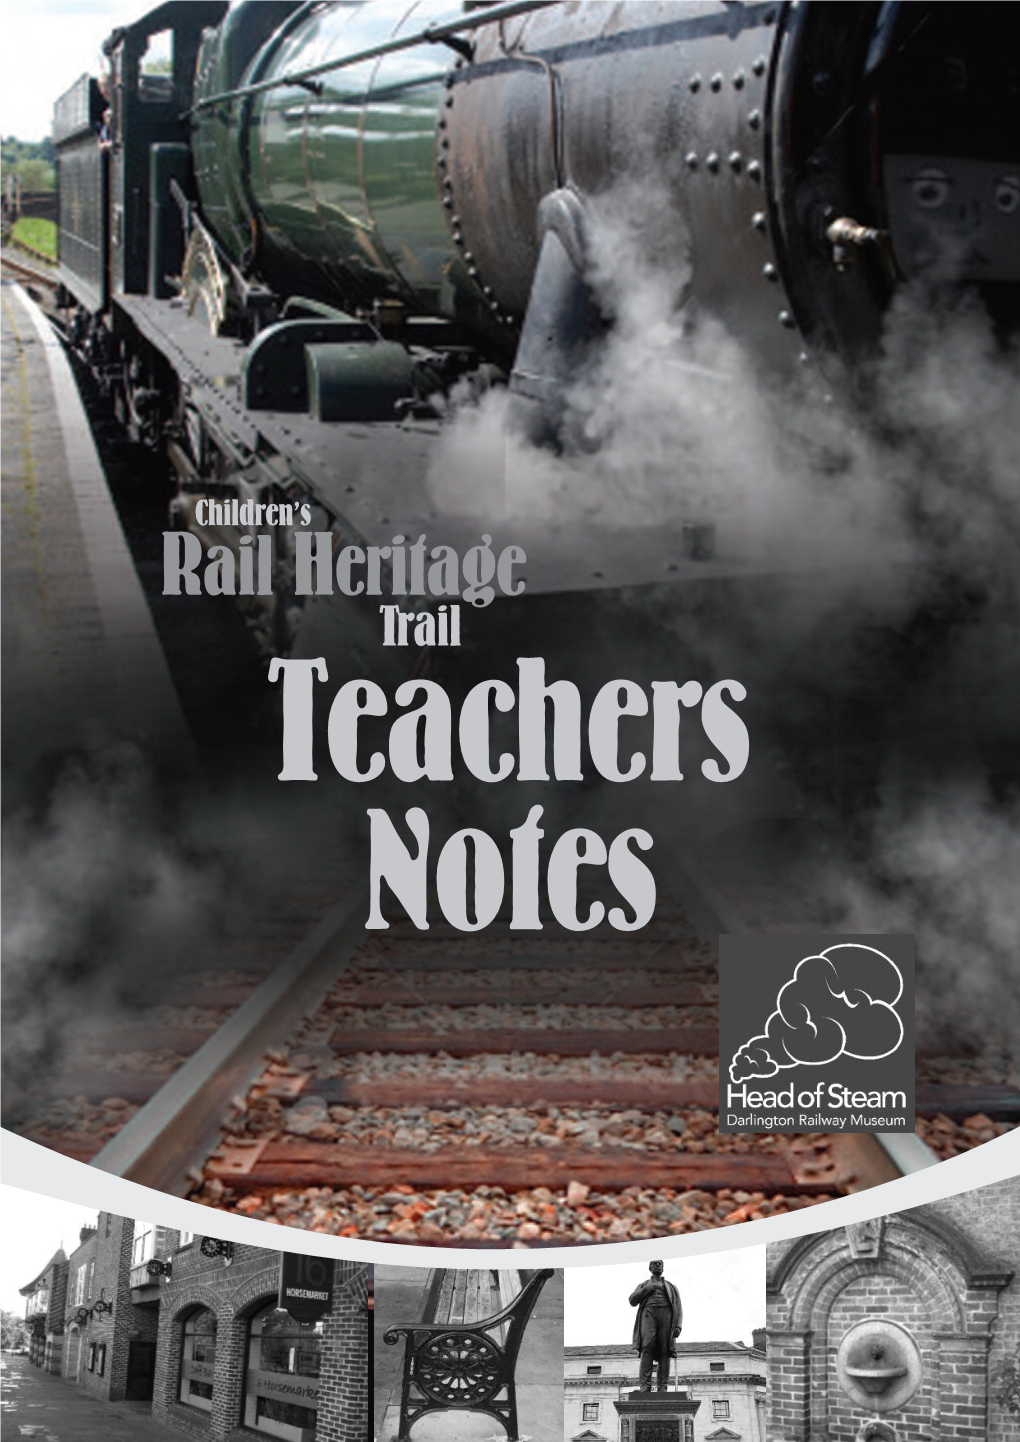 Hos Heritage Trail Teachers Notes